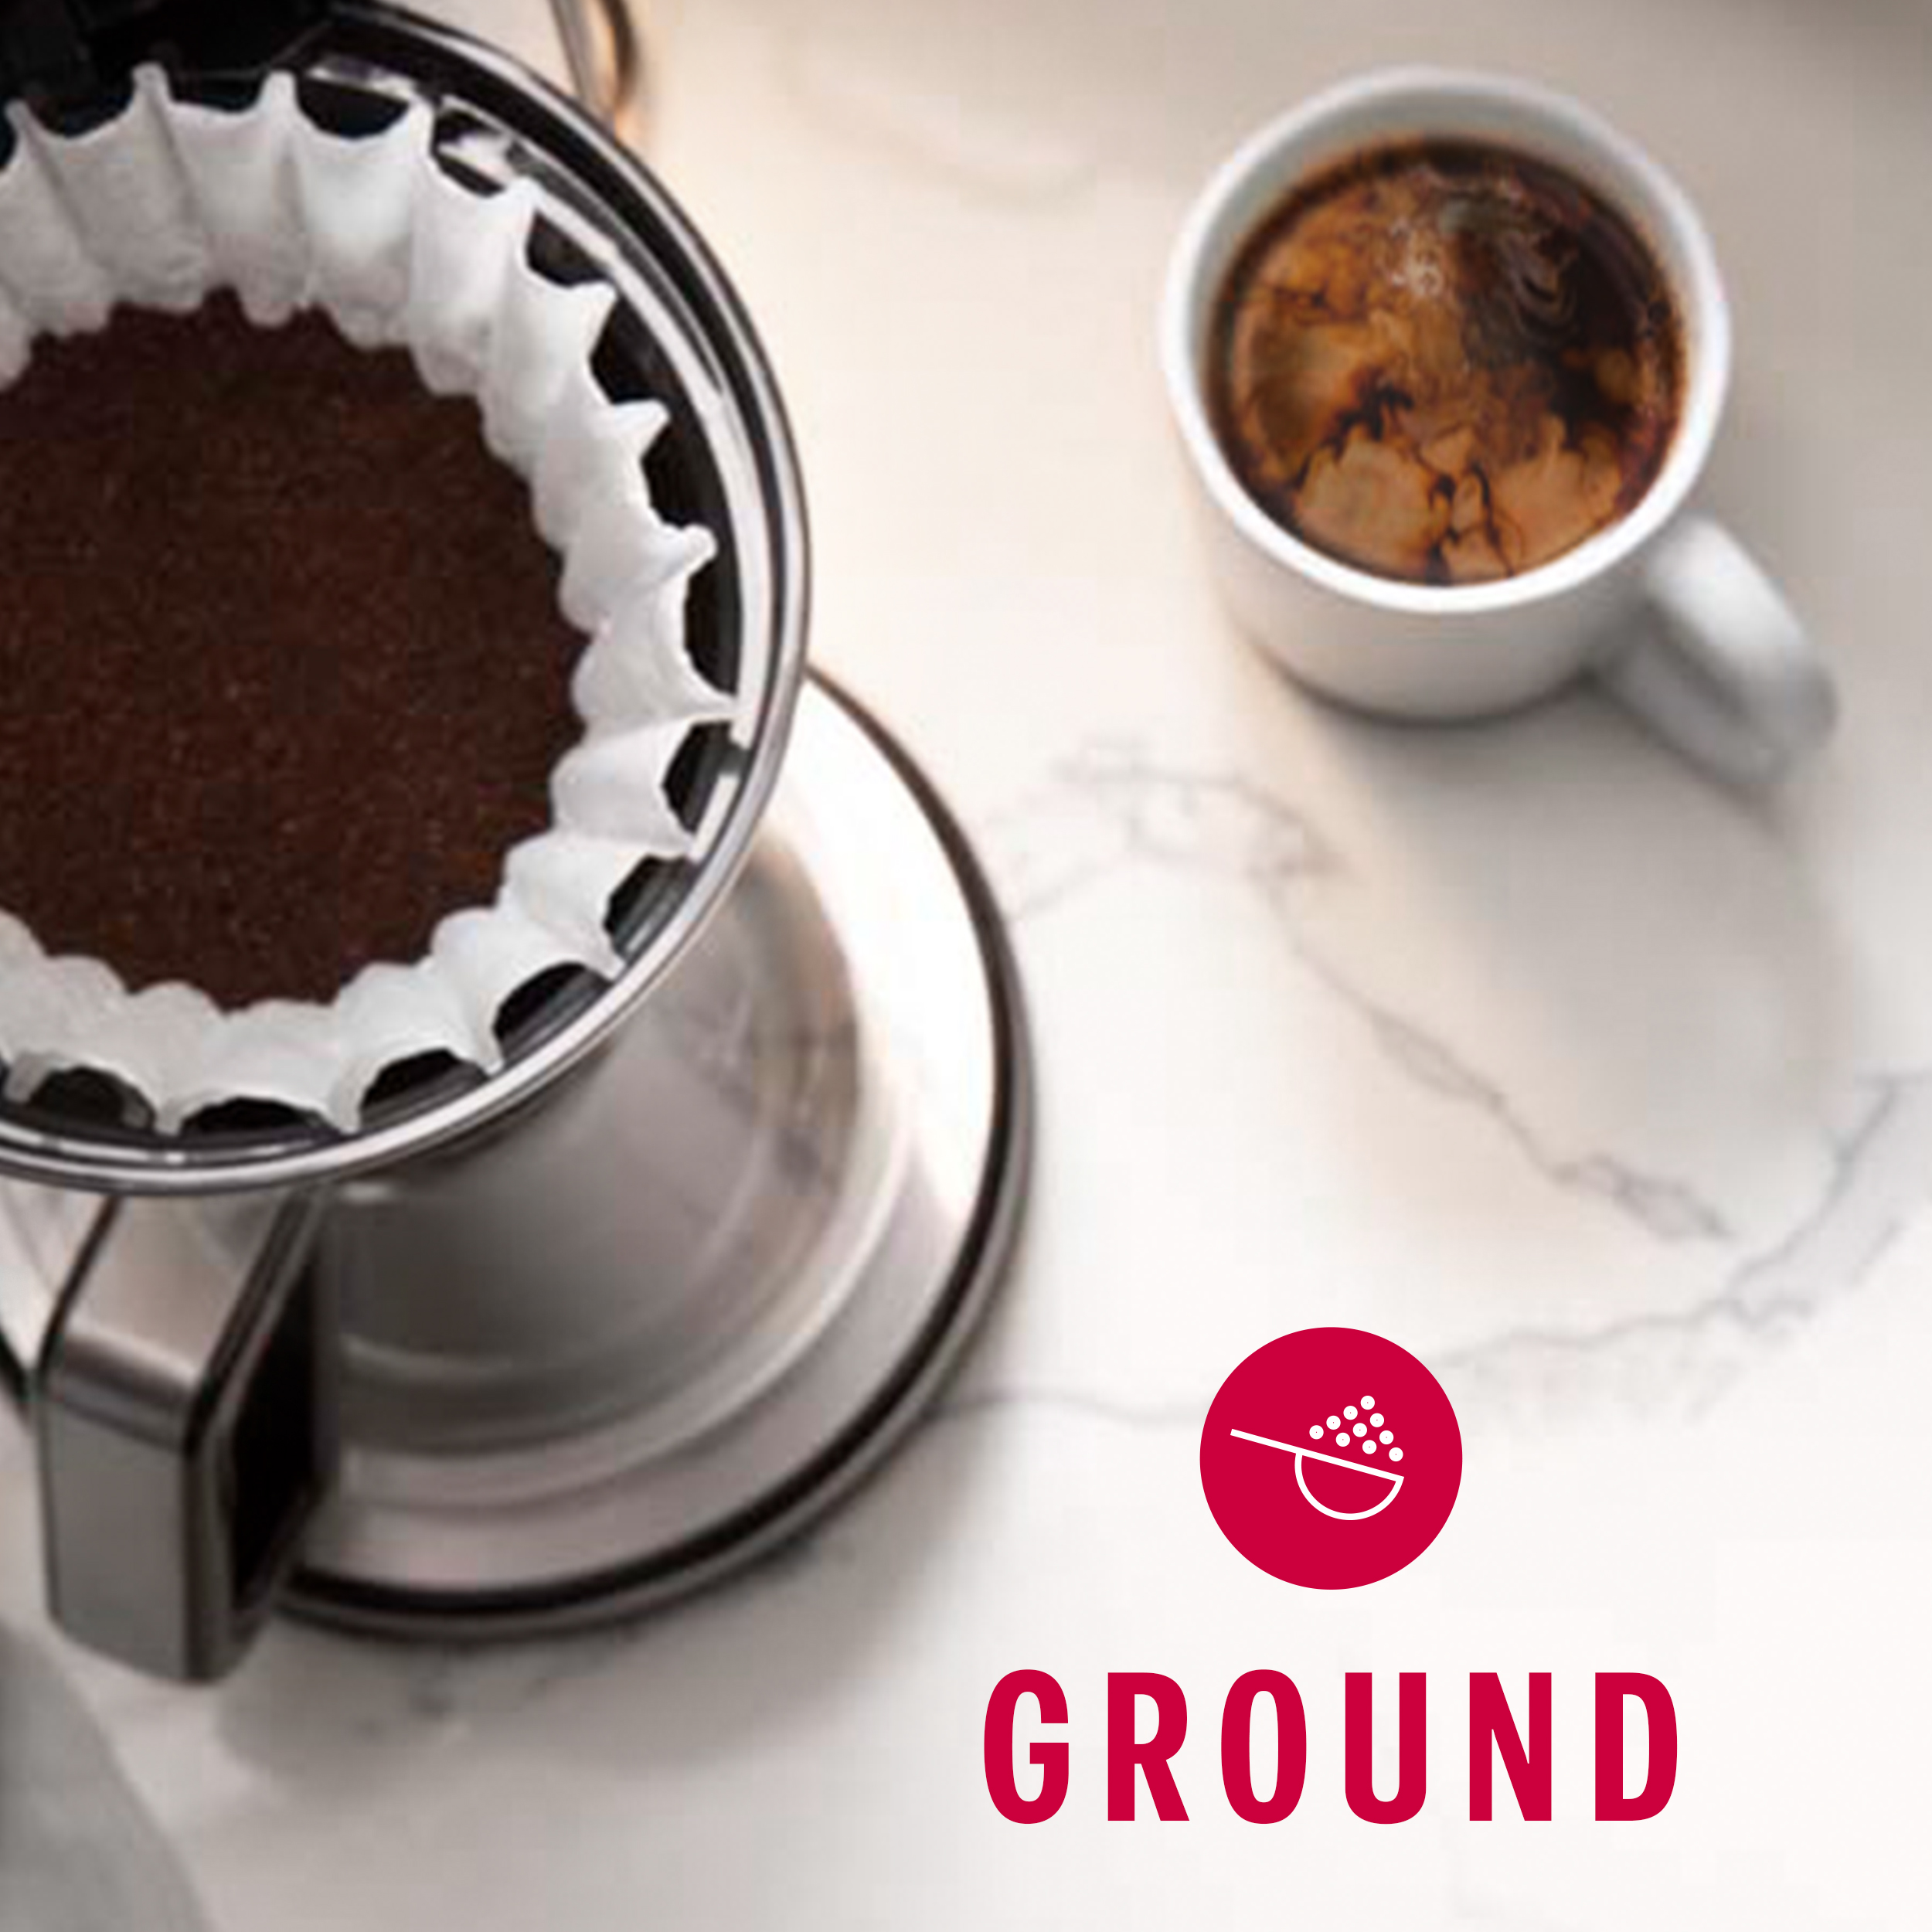 Starbucks Ground Coffee, Peppermint Mocha Flavored Coffee, 1 Bag (17 Oz) - image 3 of 9